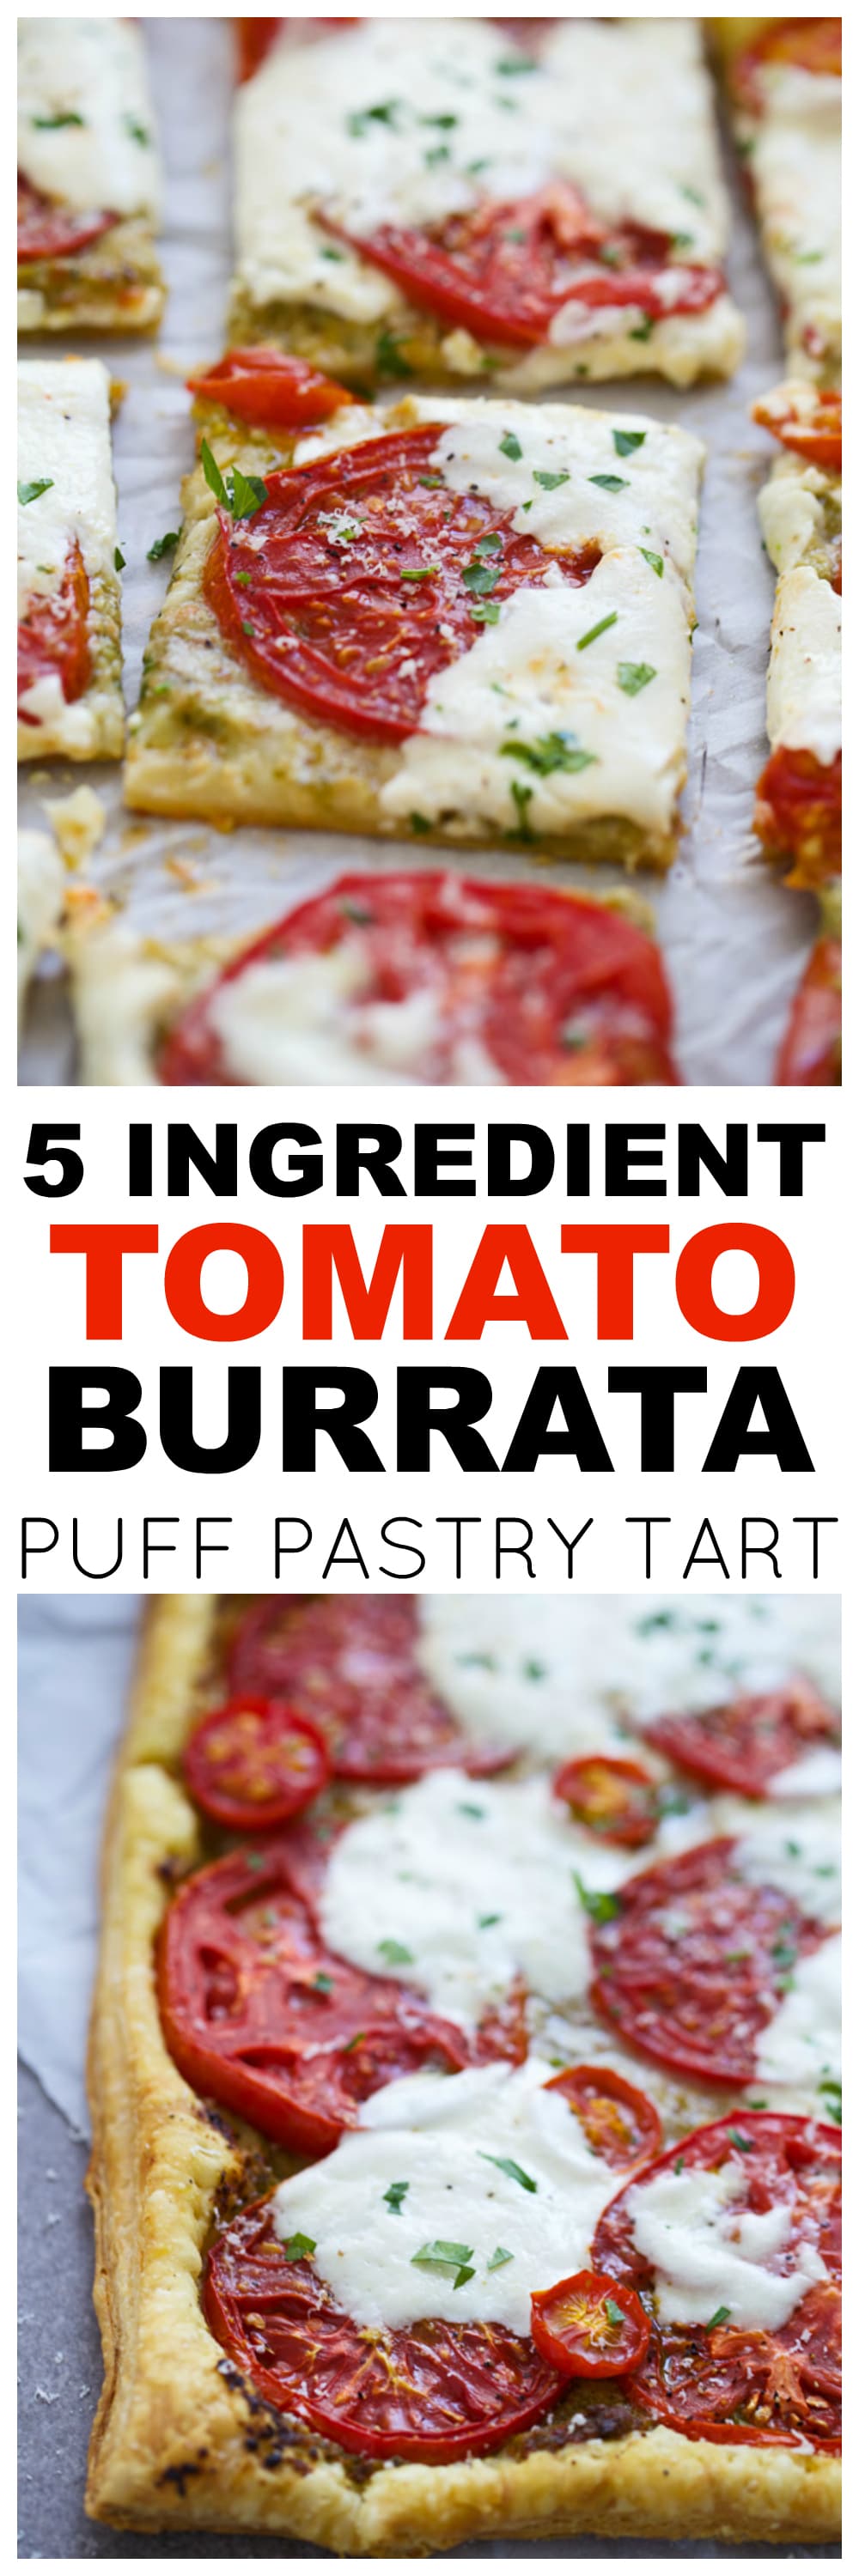 5 Ingredient Tomato Burrata Tart - Five minutes of prep! 